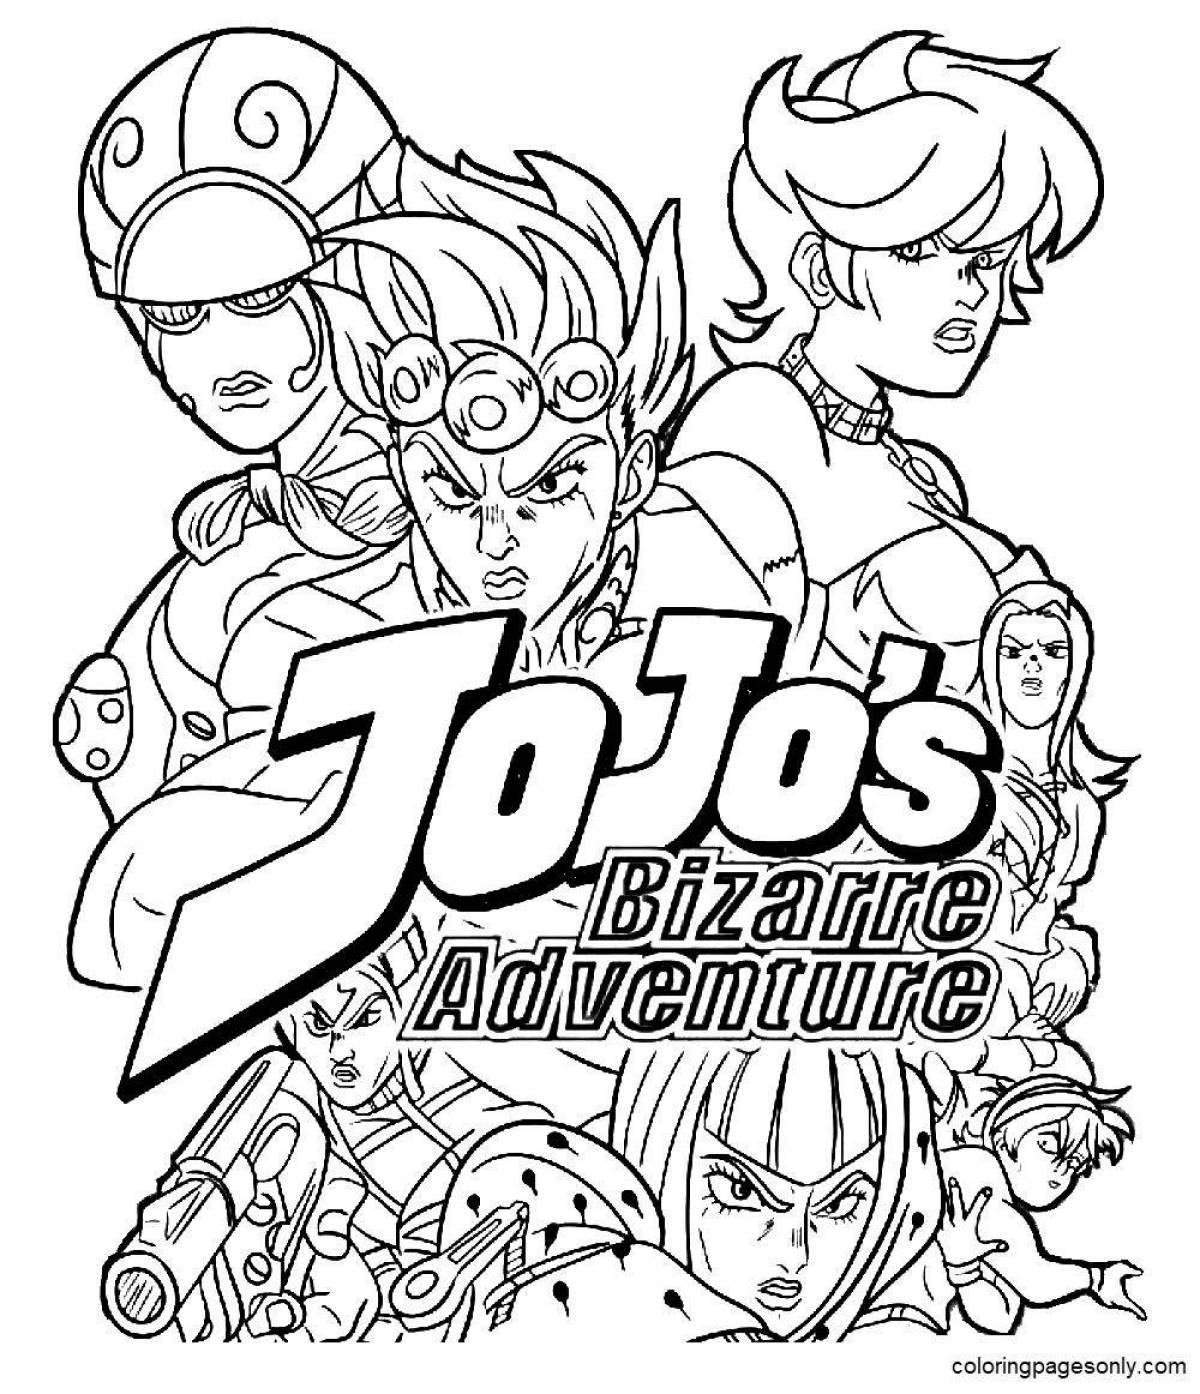 Jojo's amazing coloring page